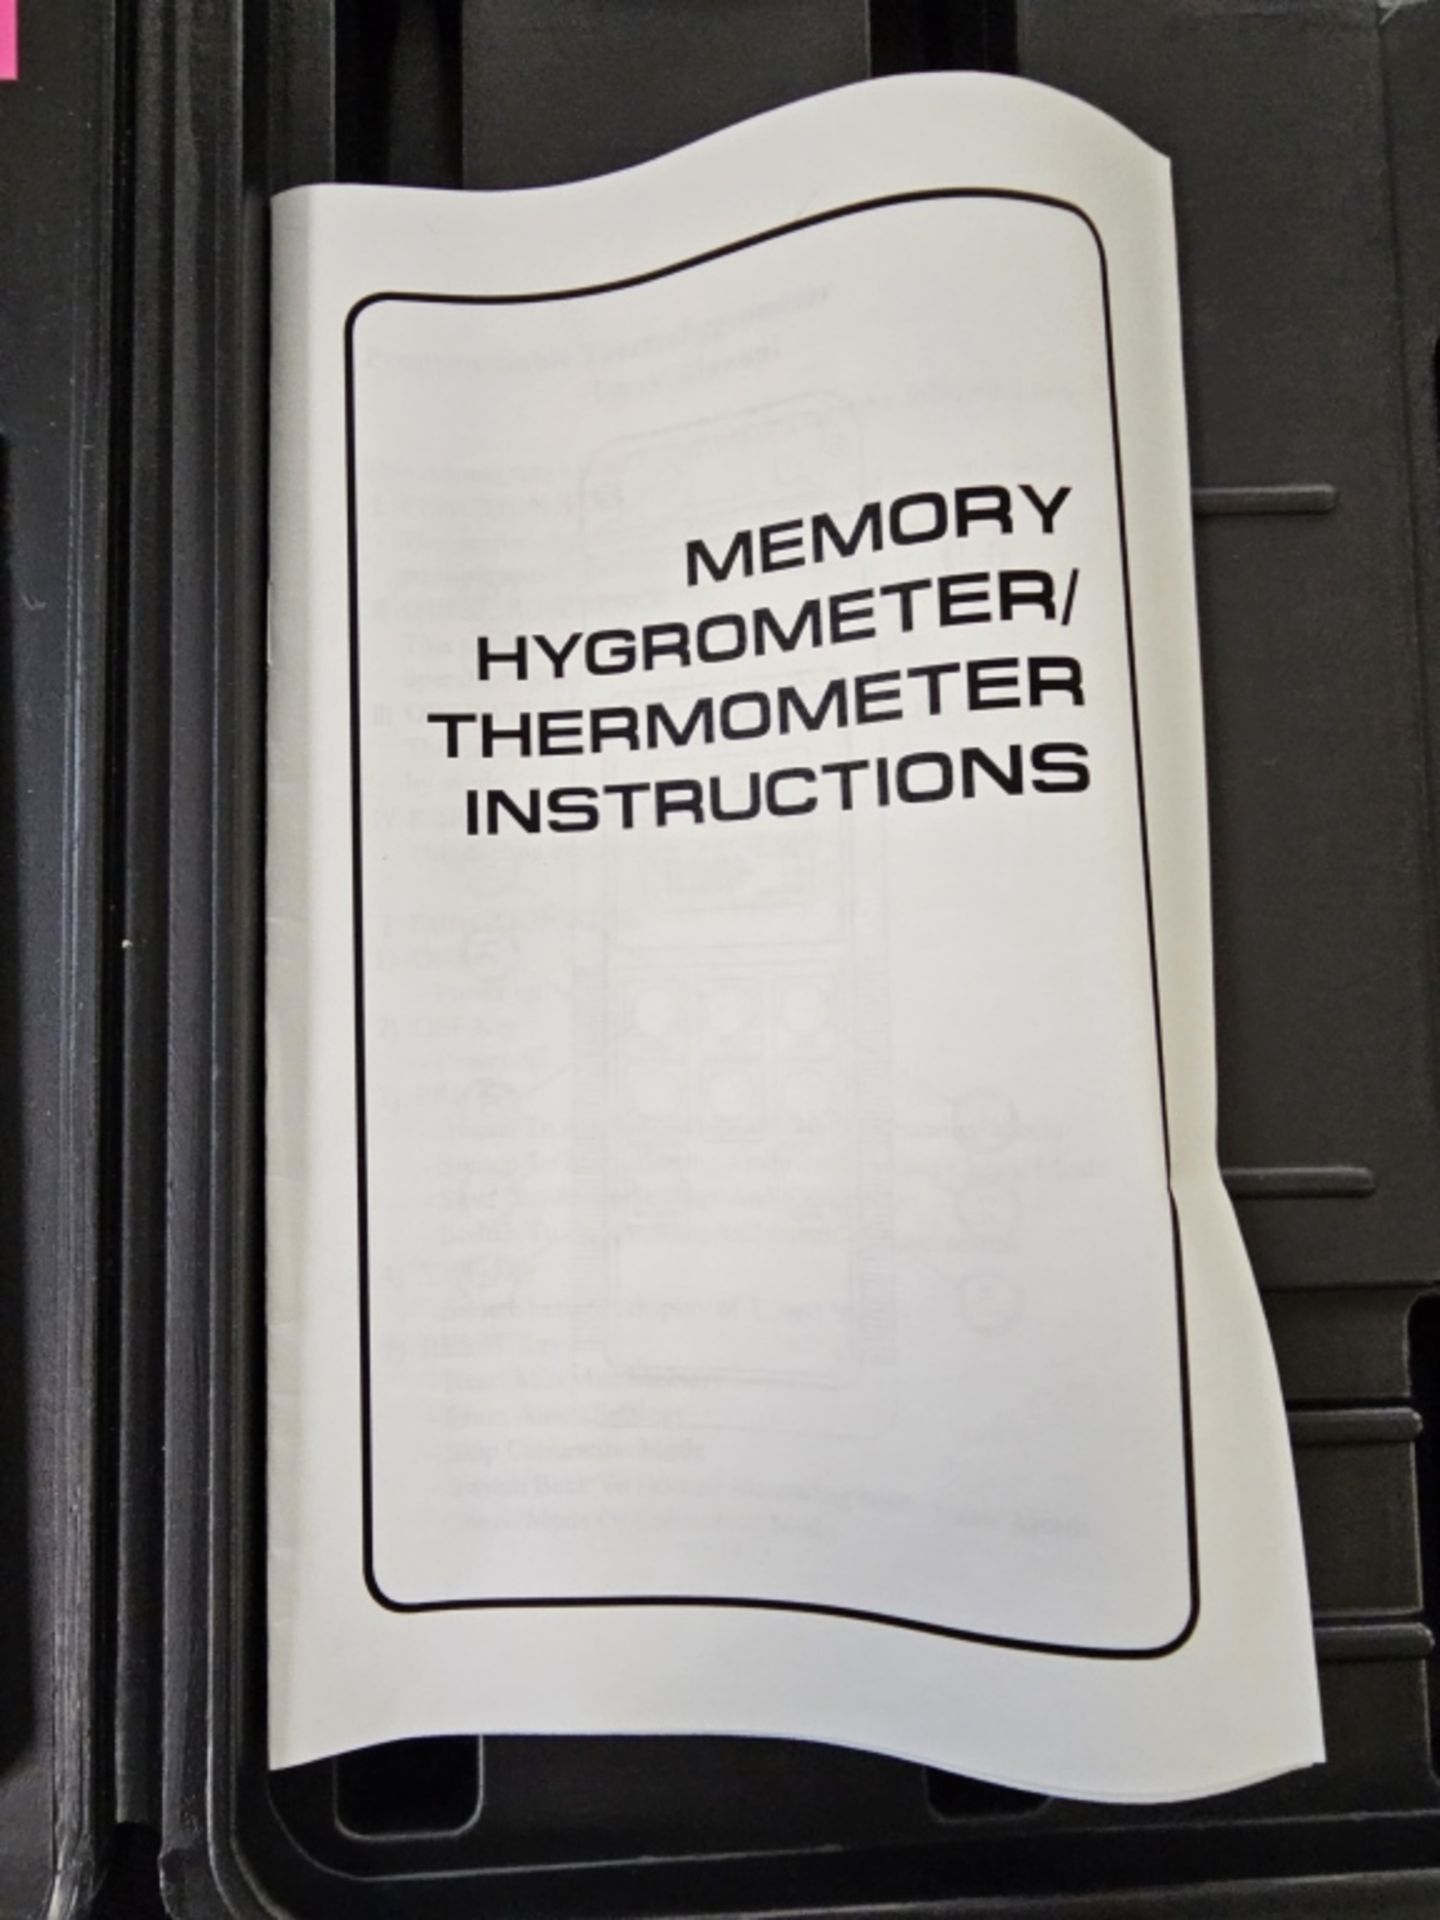 Digital Handheld Hygrometer / Thermometer - Image 5 of 5